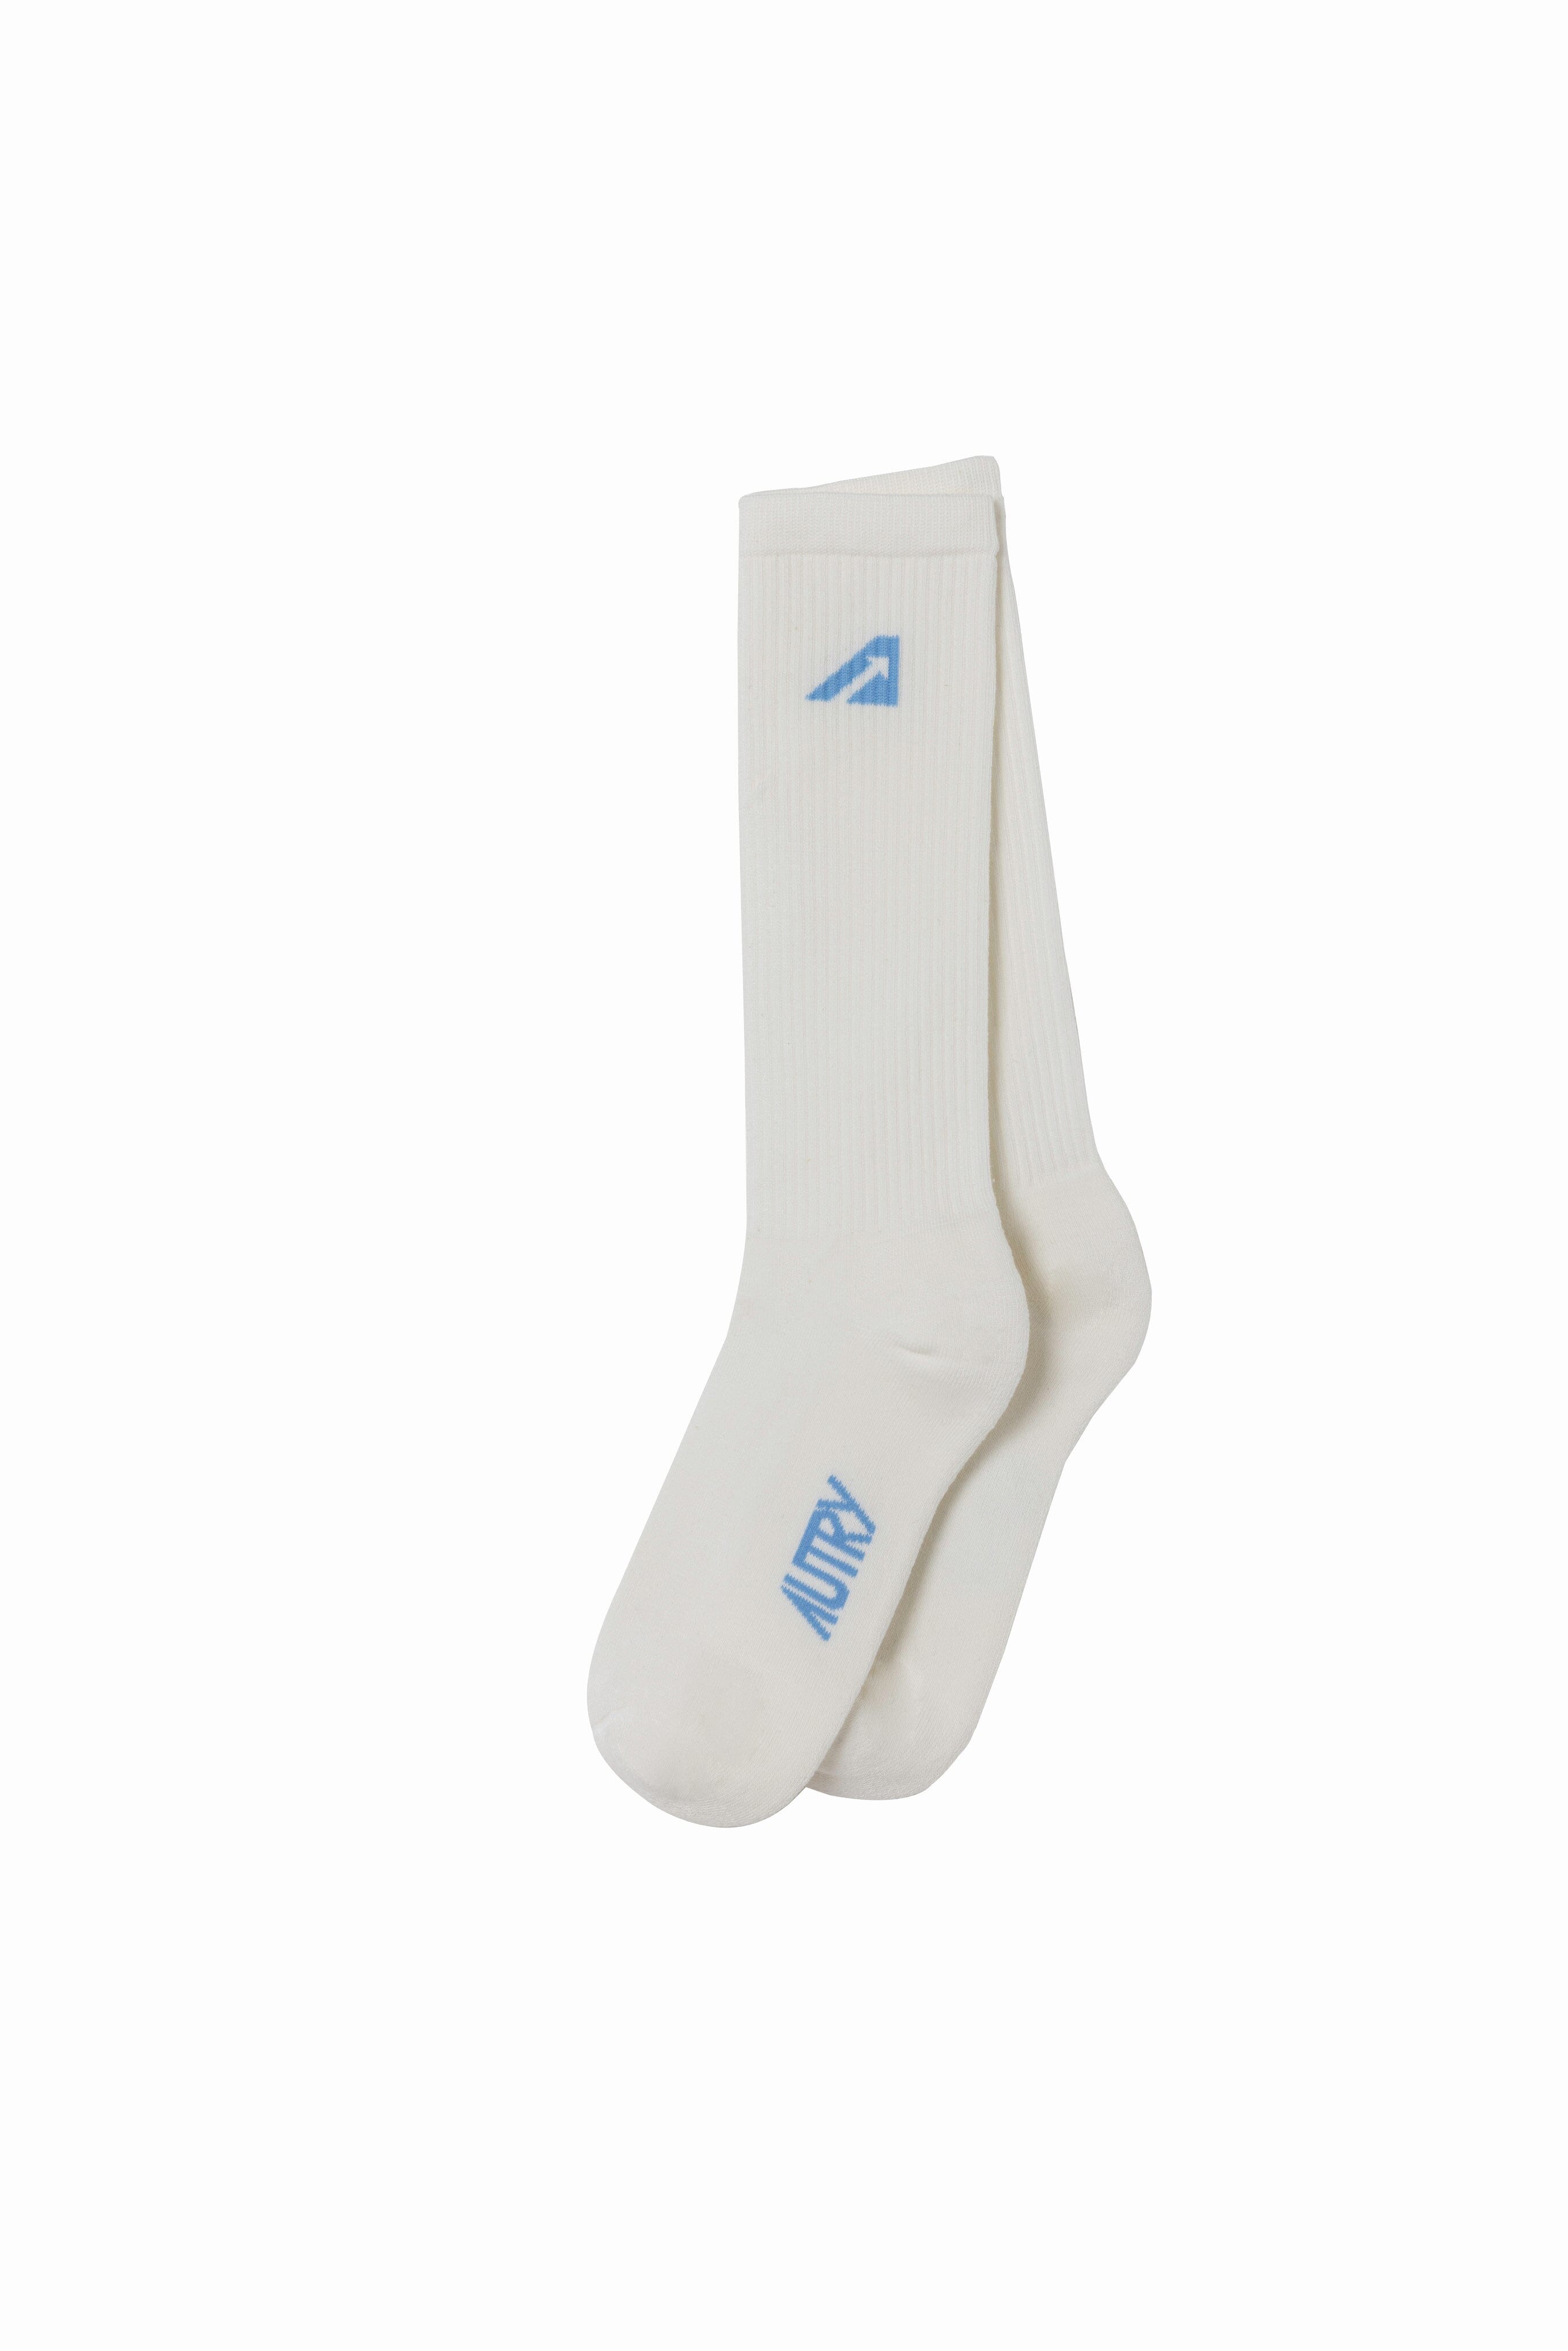 AUTRY - SOPU 64WA - Autry Socks - Bianco Blu Scarpe Uomo AUTRY - Collezione uomo 